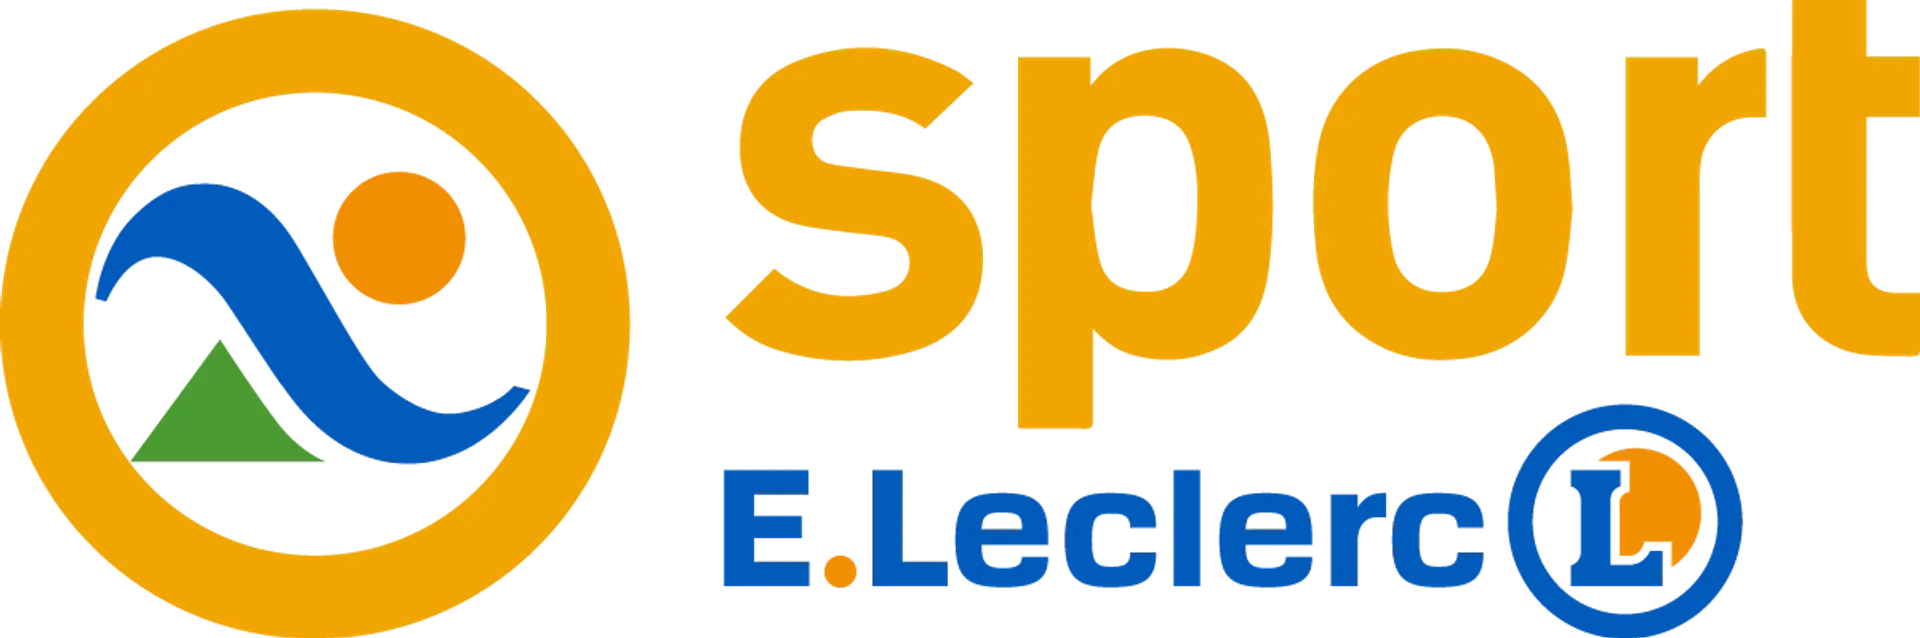 E.LECLERC SPORT logo du catalogue